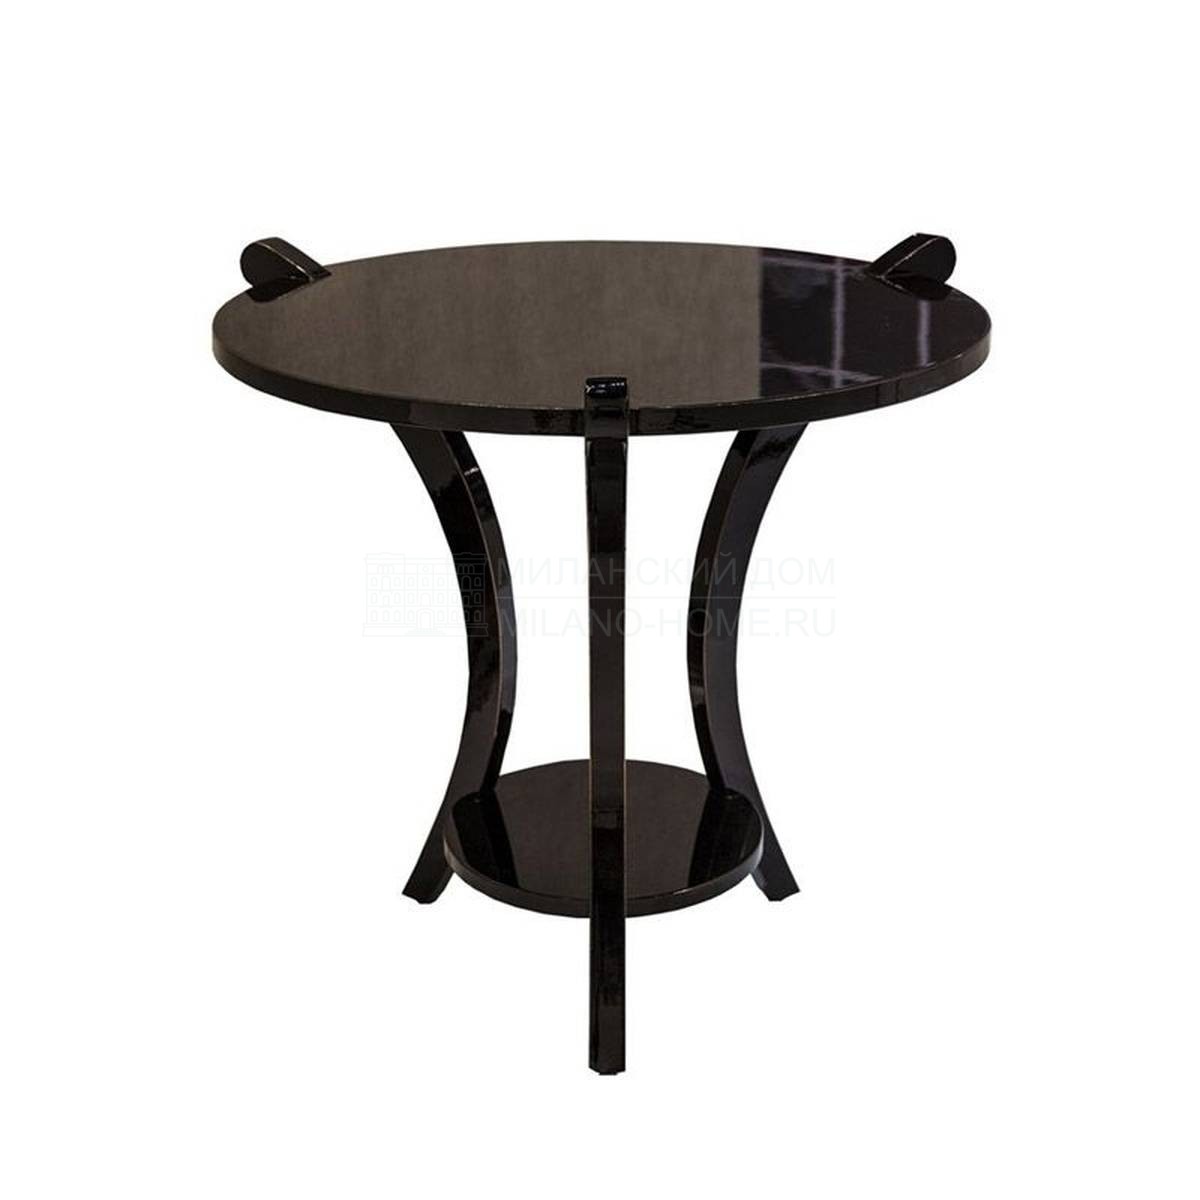 Кофейный столик M-11160 coffee table из Испании фабрики GUADARTE